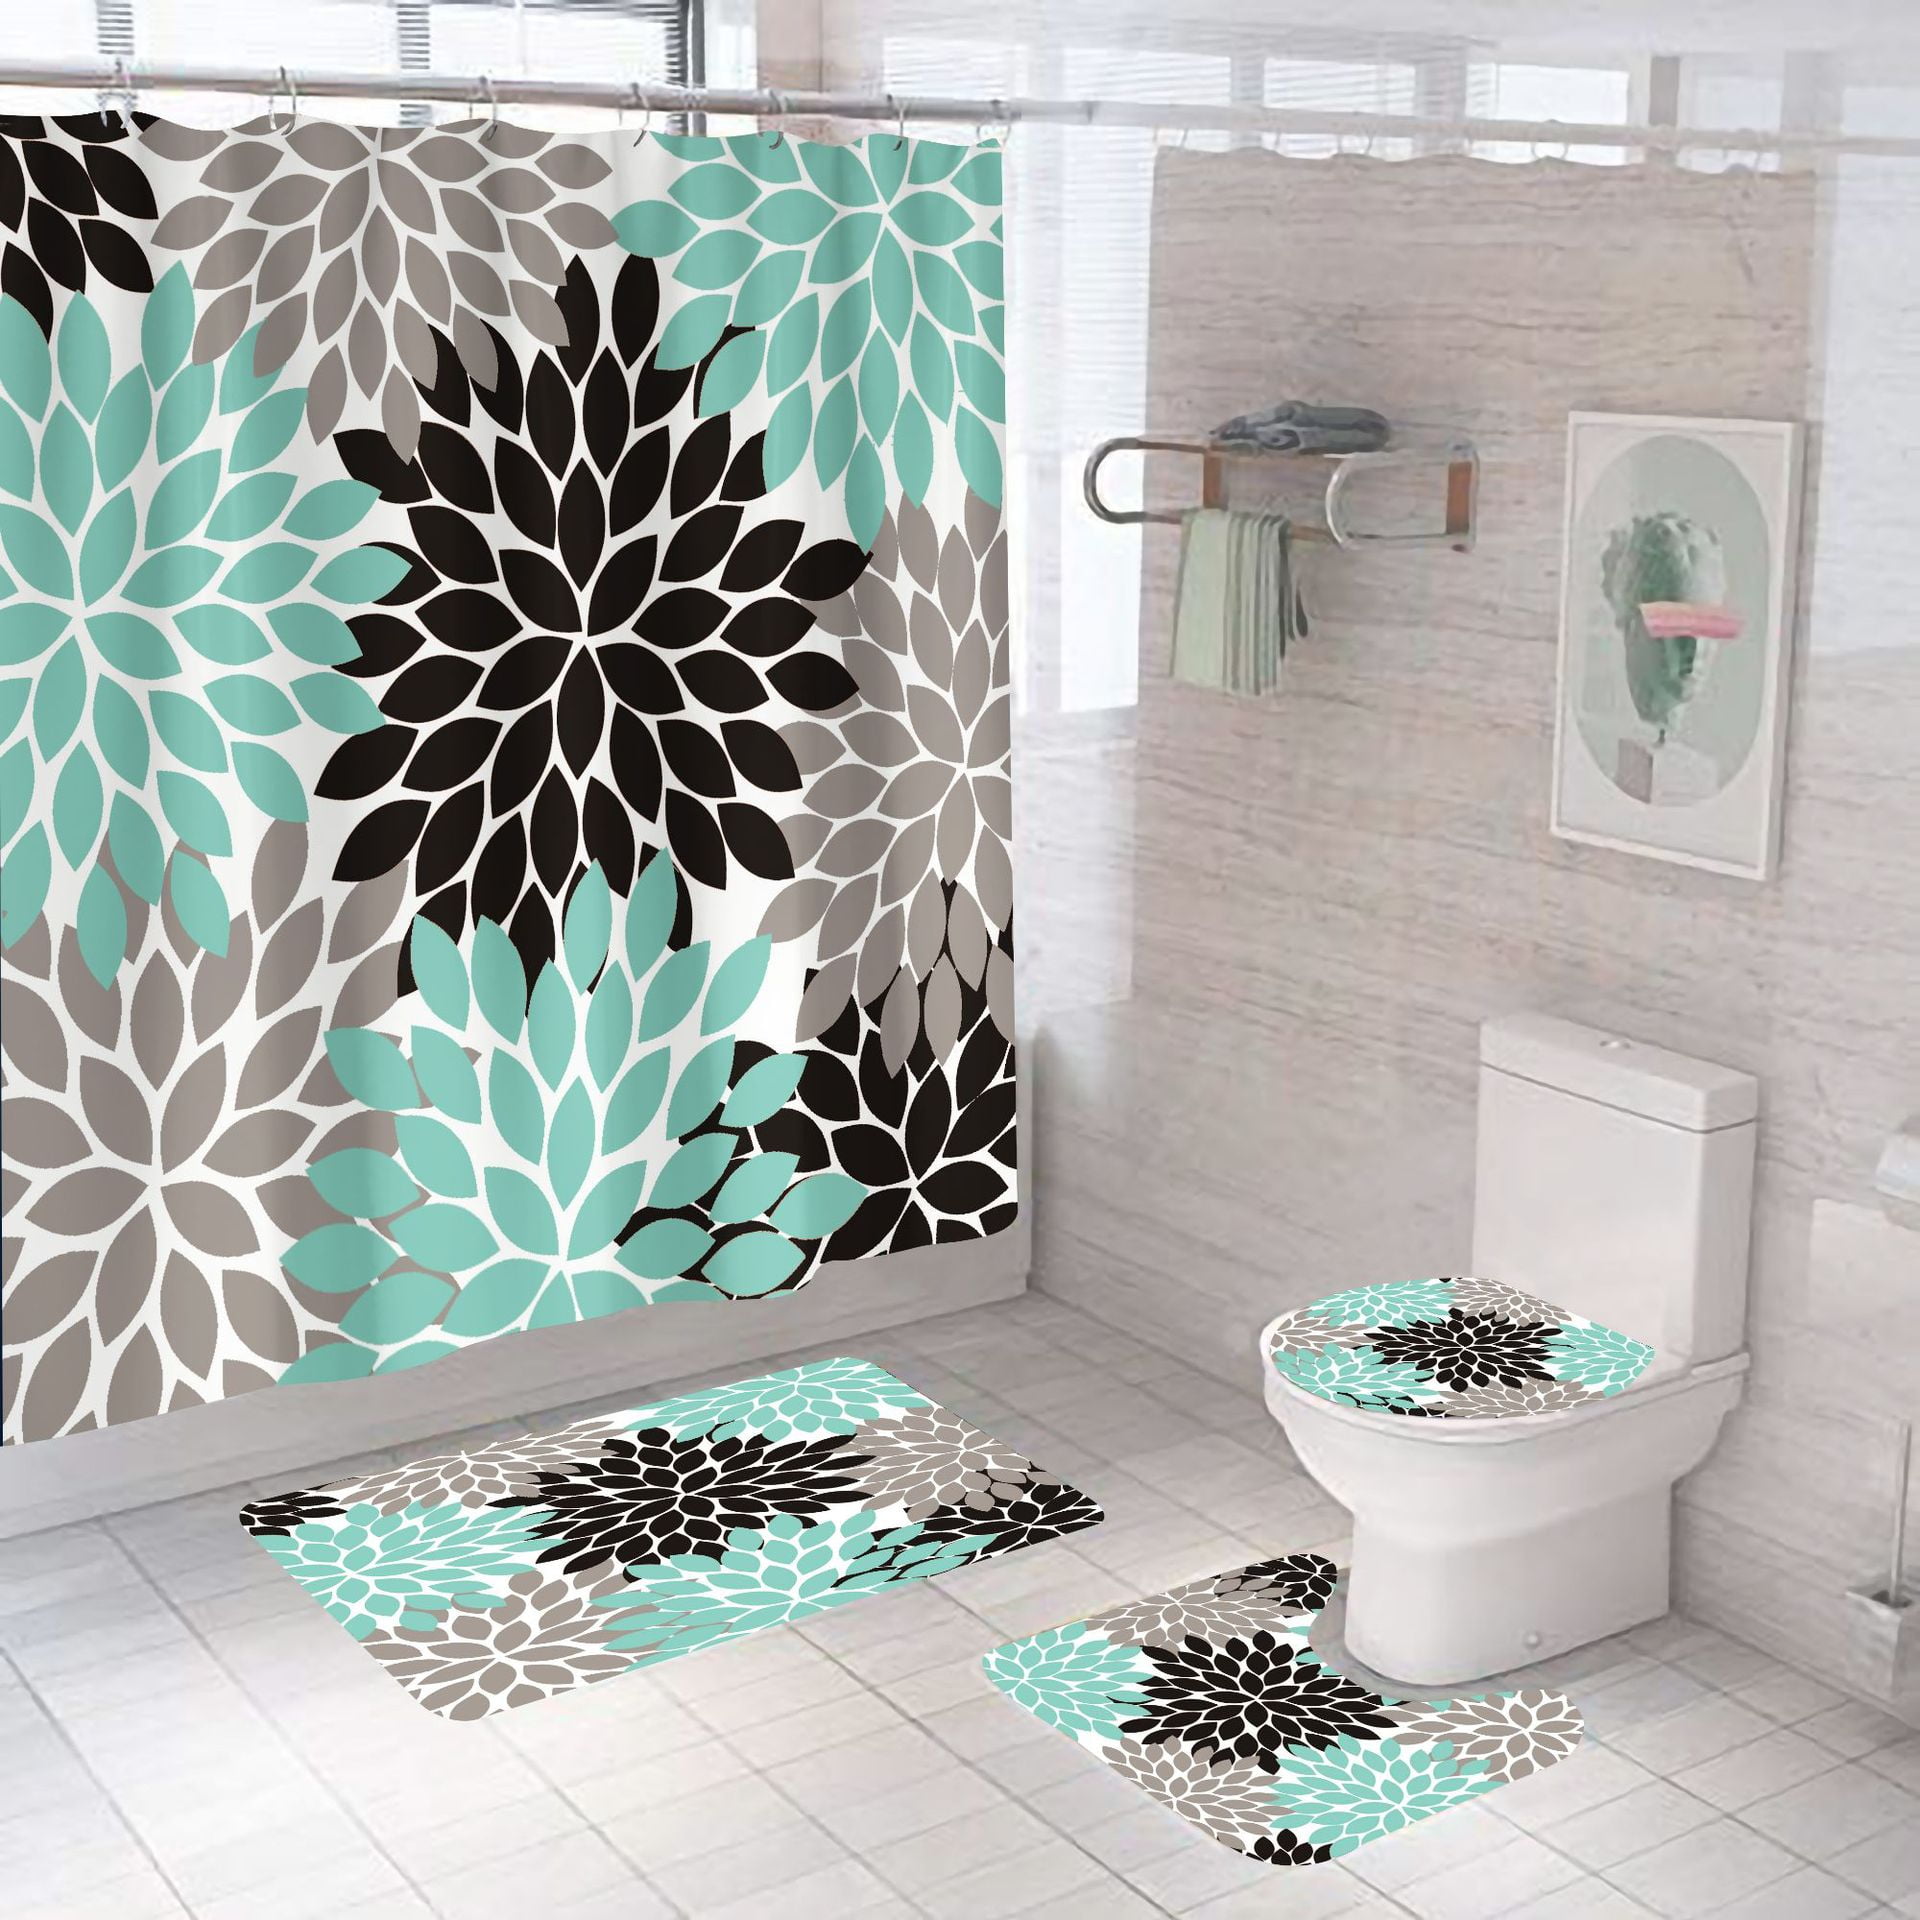 Dahlia Pinnata Floral Aqua Green Long Shower Curtain Bathroom Decorative Waterproof Polyester Fabric Bath Curtains with Hooks 72 x 78 Large Size 